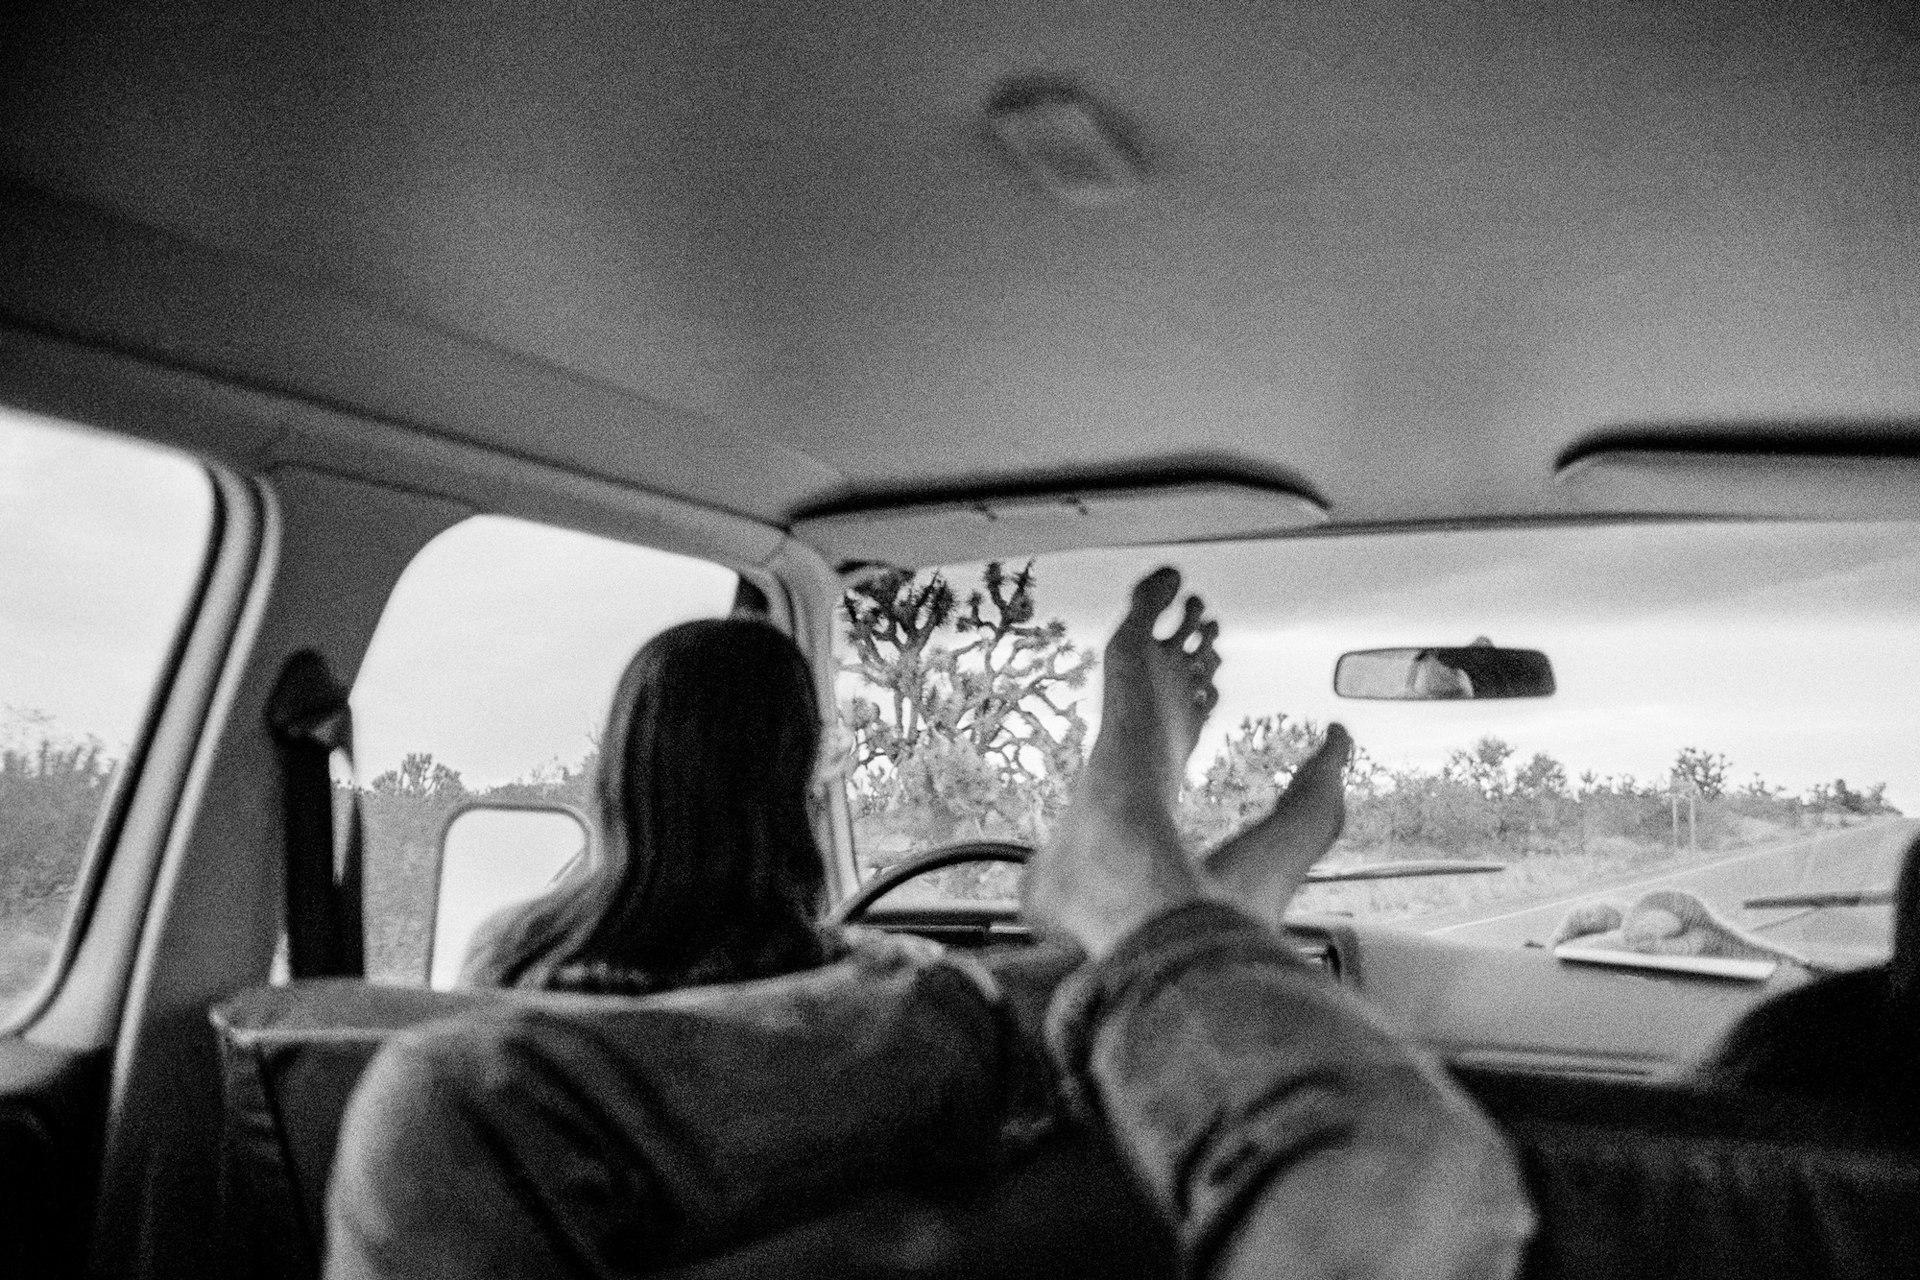 On the road from California to Arizona via Joshua Tree Forest. 1979.